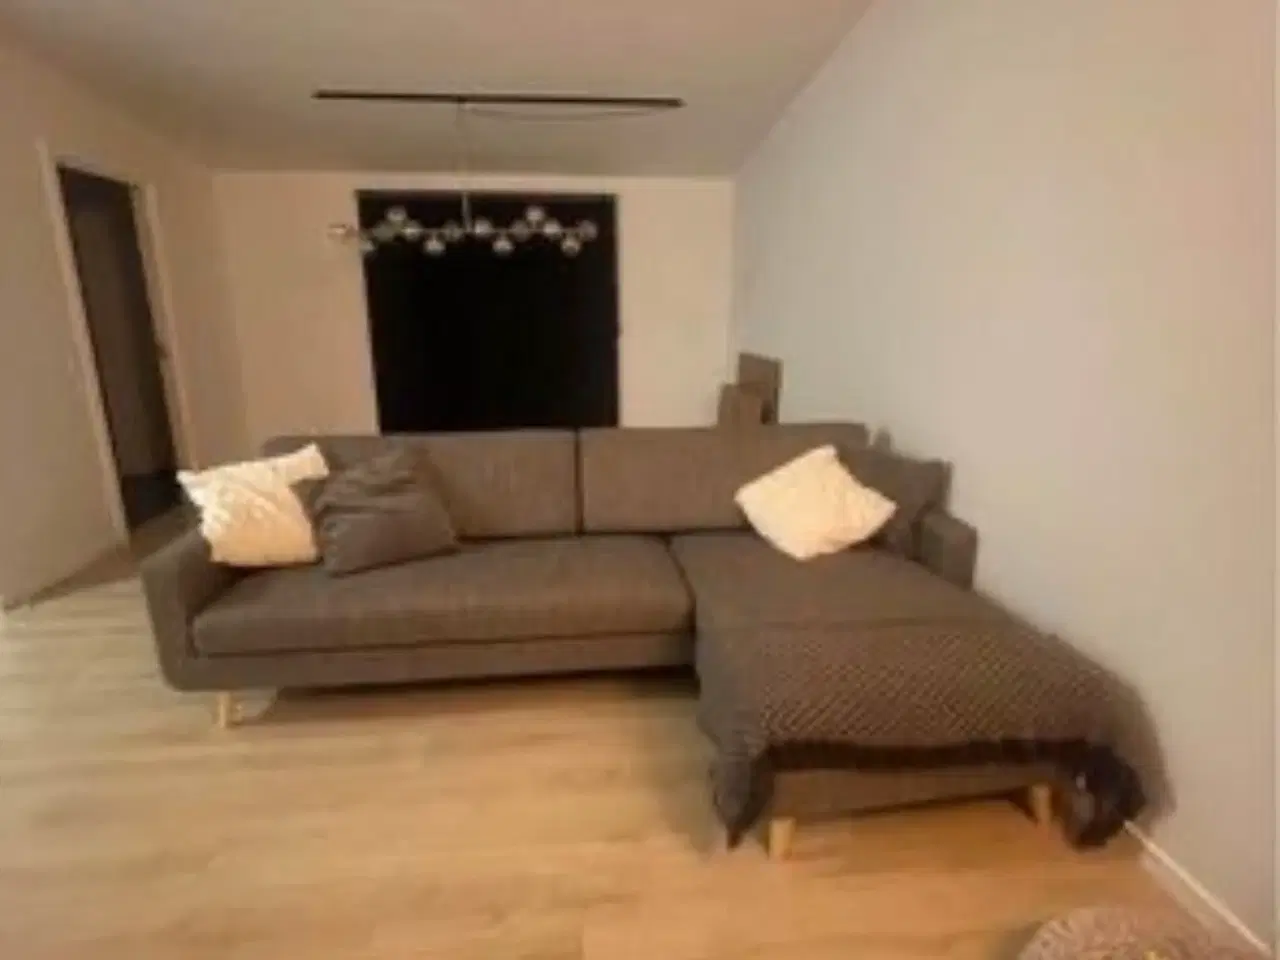 Billede 1 - Grå sofa